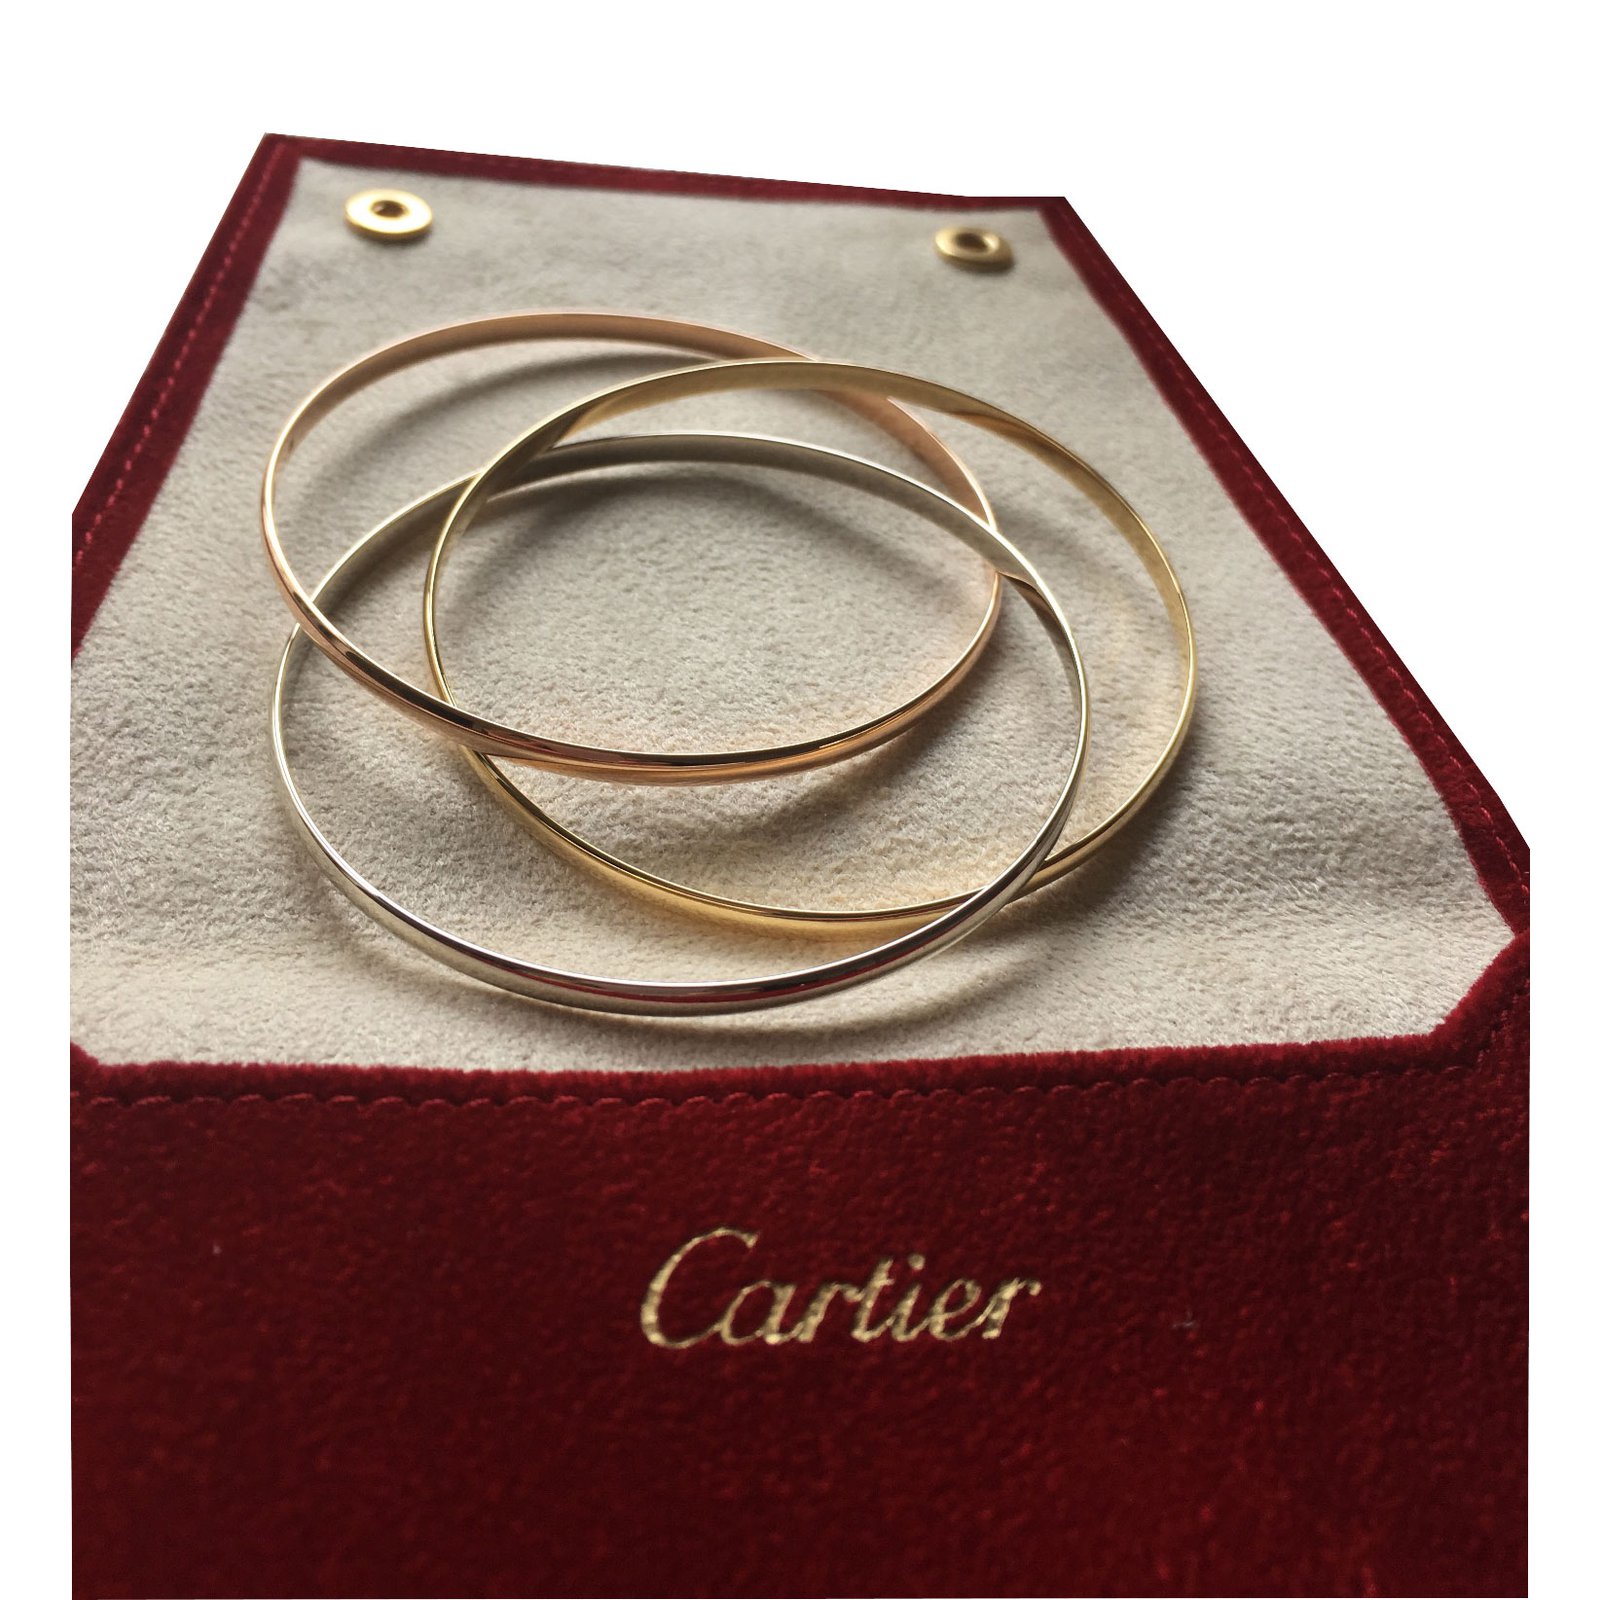 Authentic Cartier Bracelet string cord C Heart White Gold #2143 | eBay